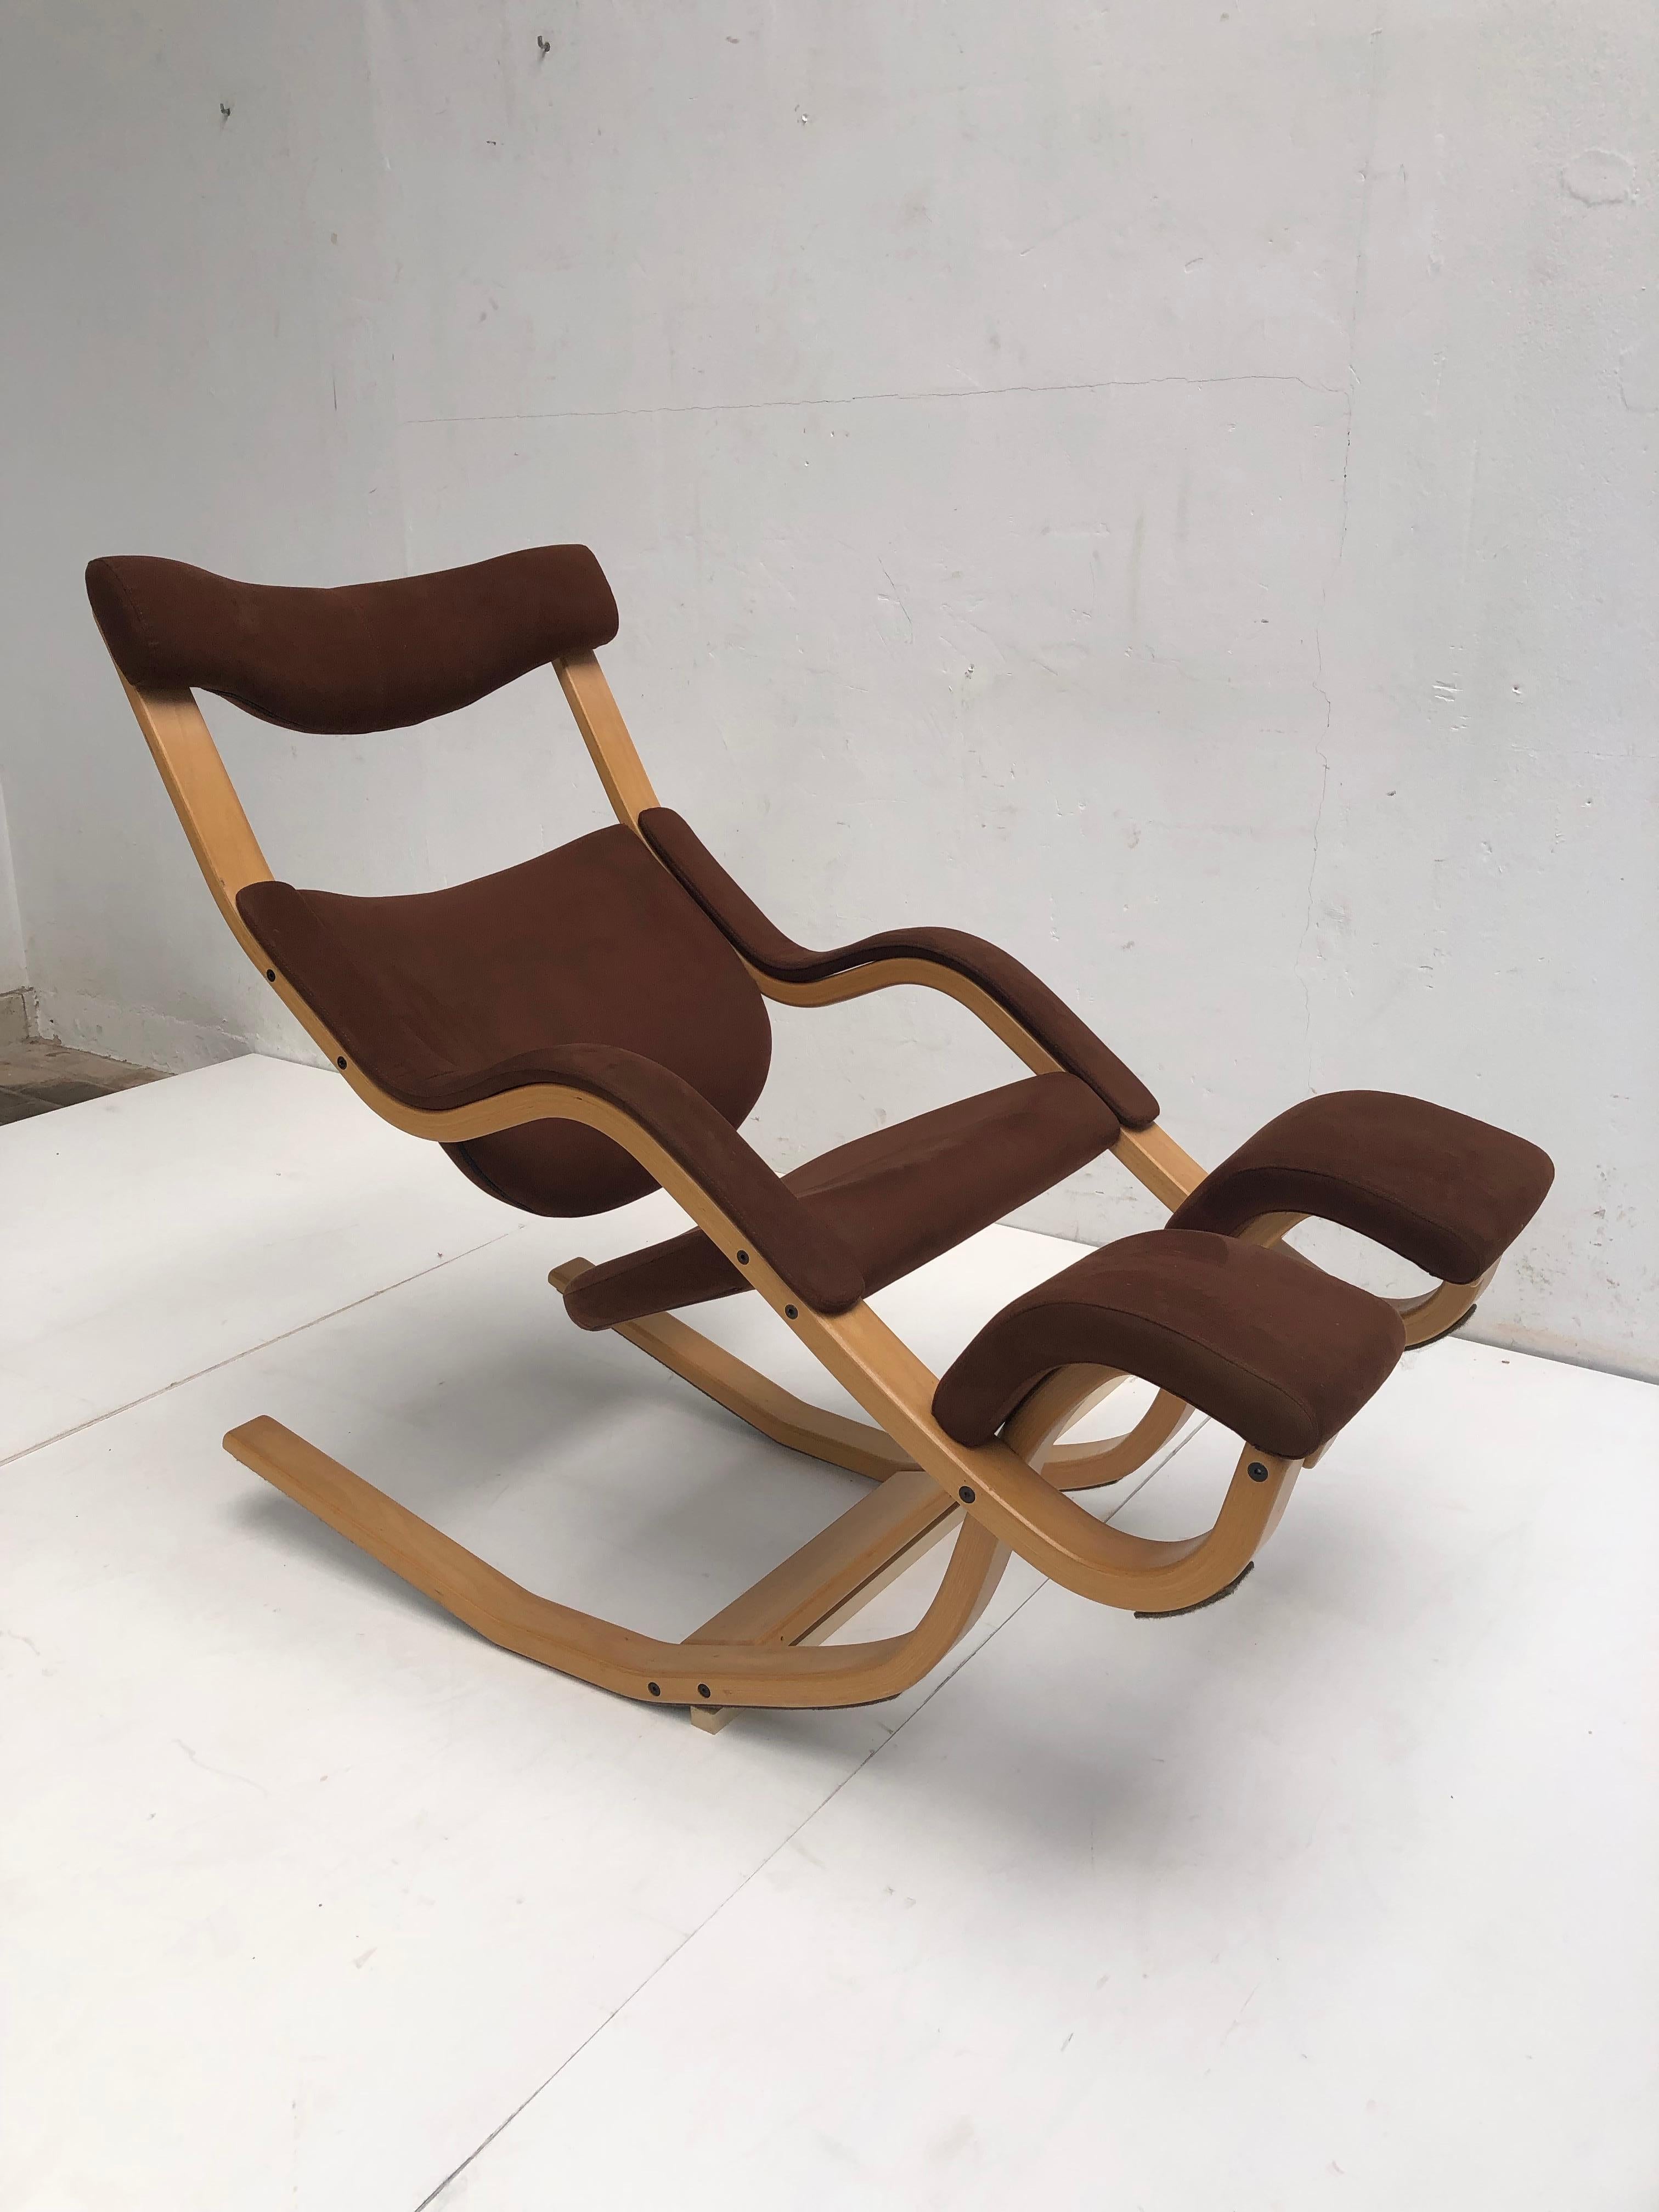 Scandinavian Modern Gravity Chair by Peter Opsvik for Stokke, Sweden 1984